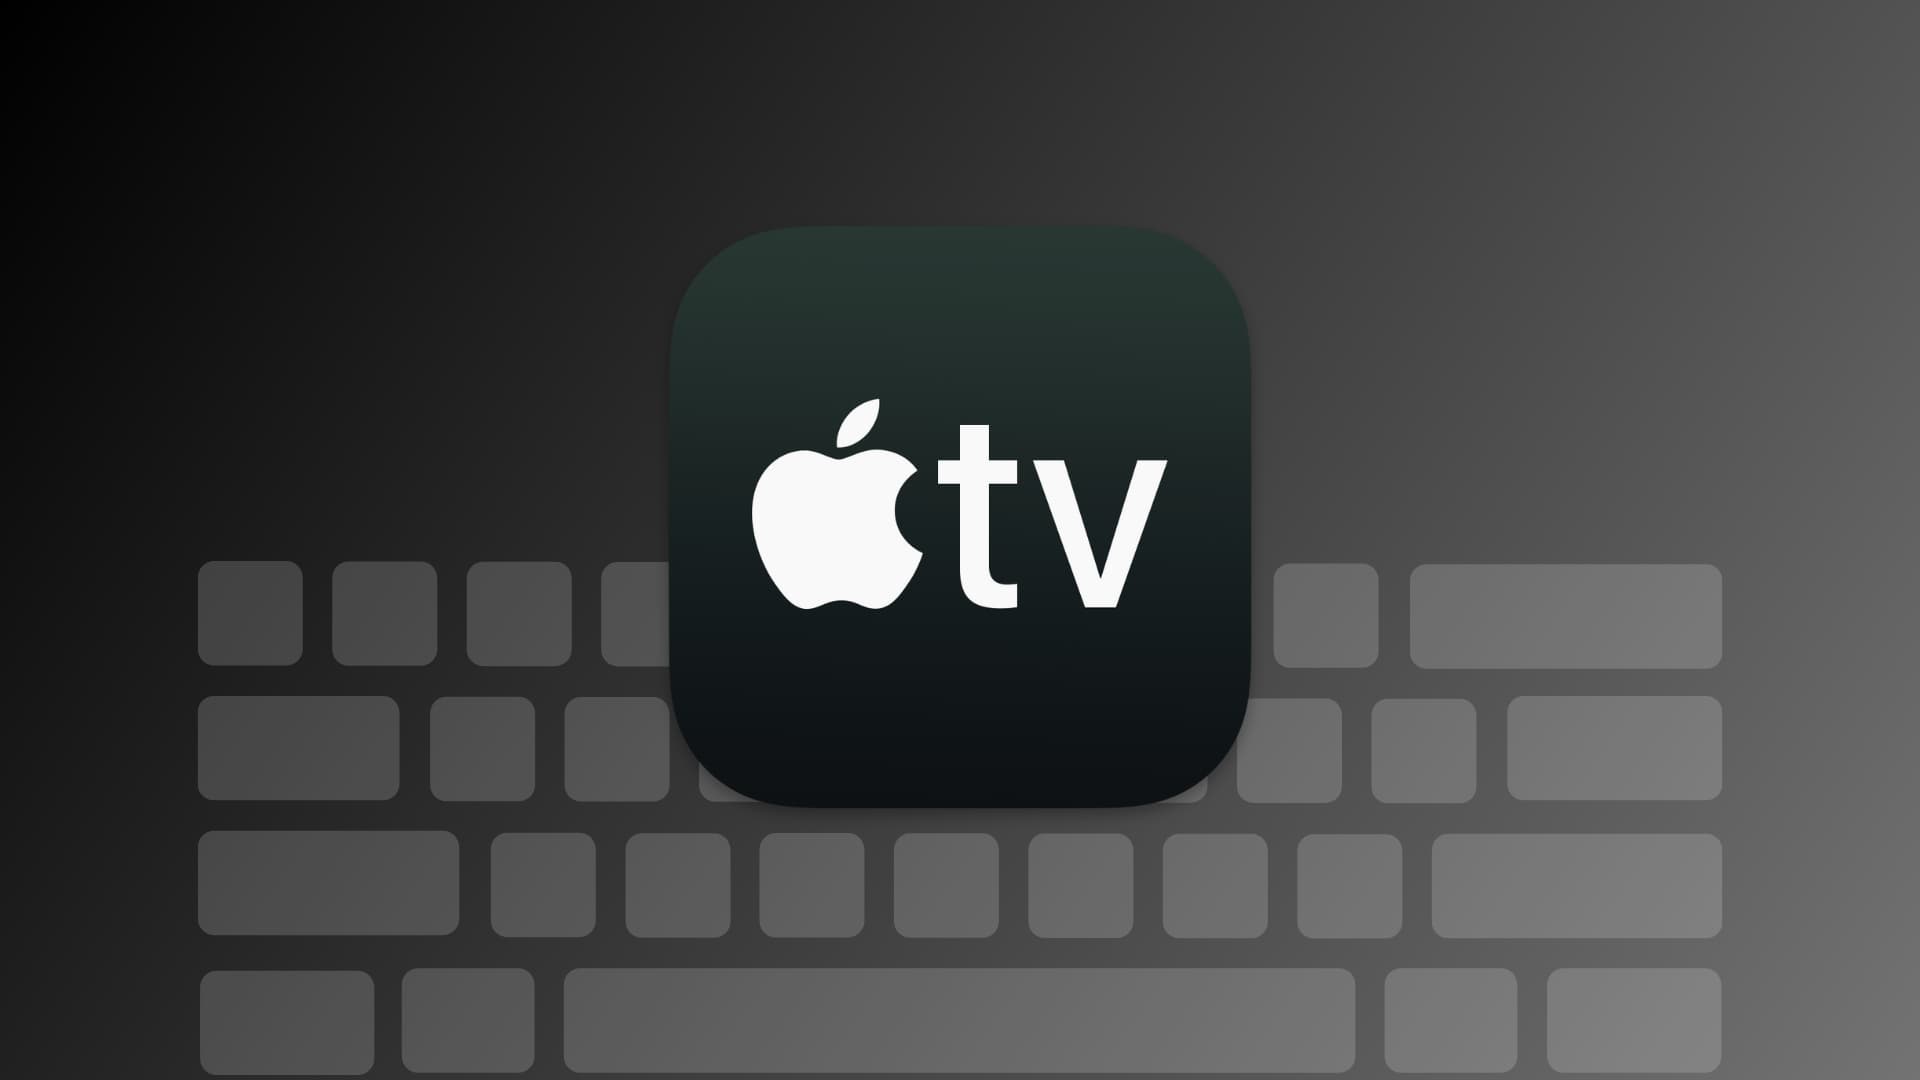 TV app keyboard shortcuts for Mac